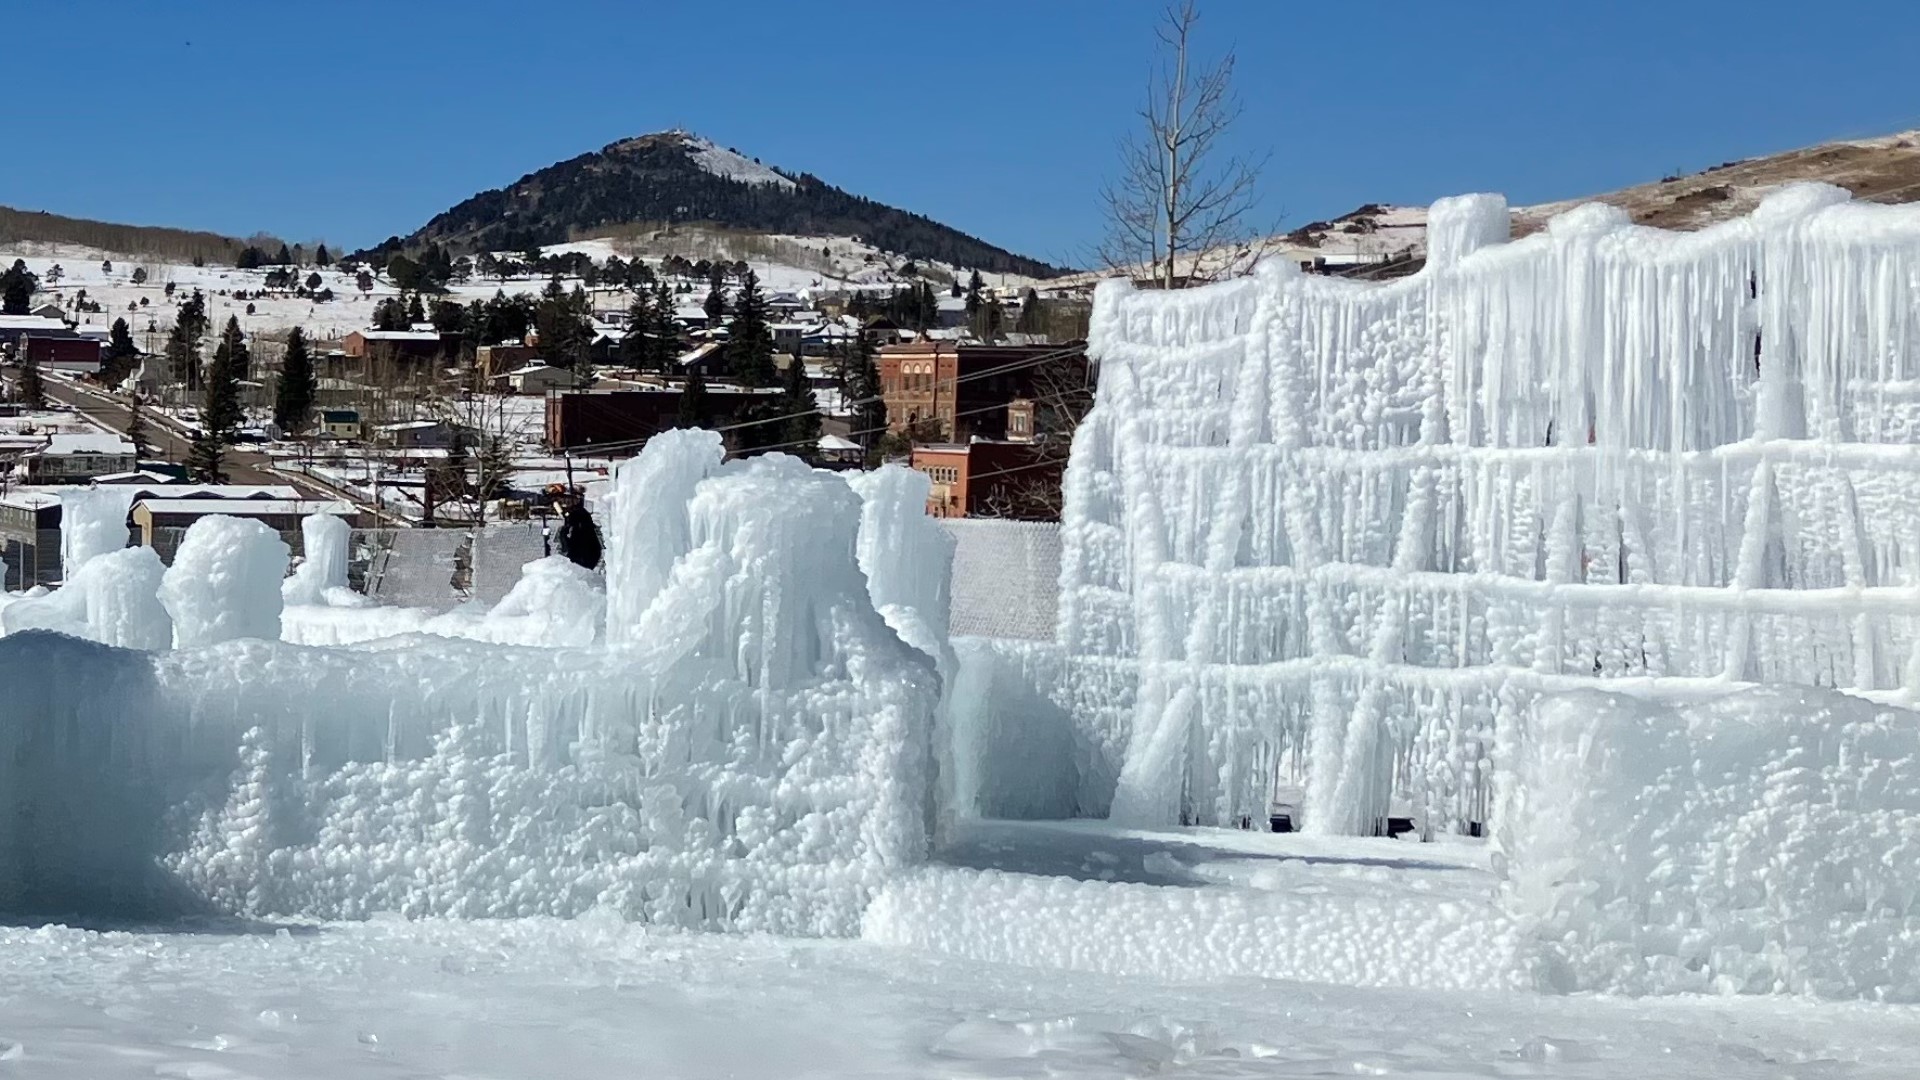 Ice Castles return to Colorado in frozen town of Cripple Creek